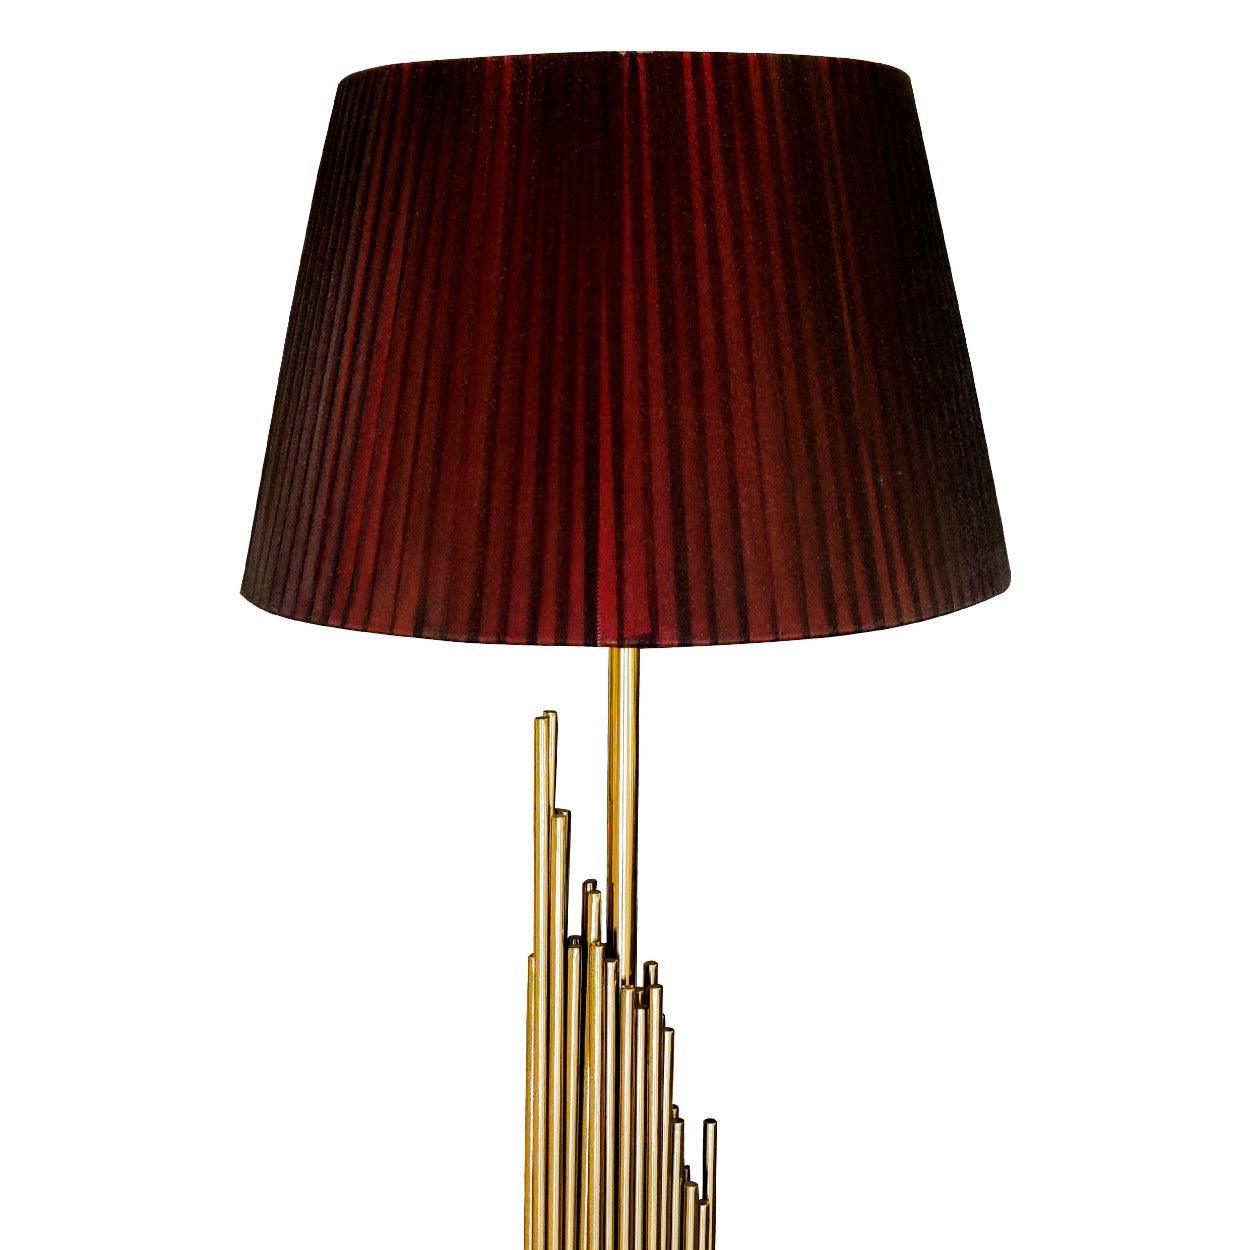 ANKUR ORGAN CONTEMPORARY FLOOR LAMP GOLD FINISH - Ankur Lighting